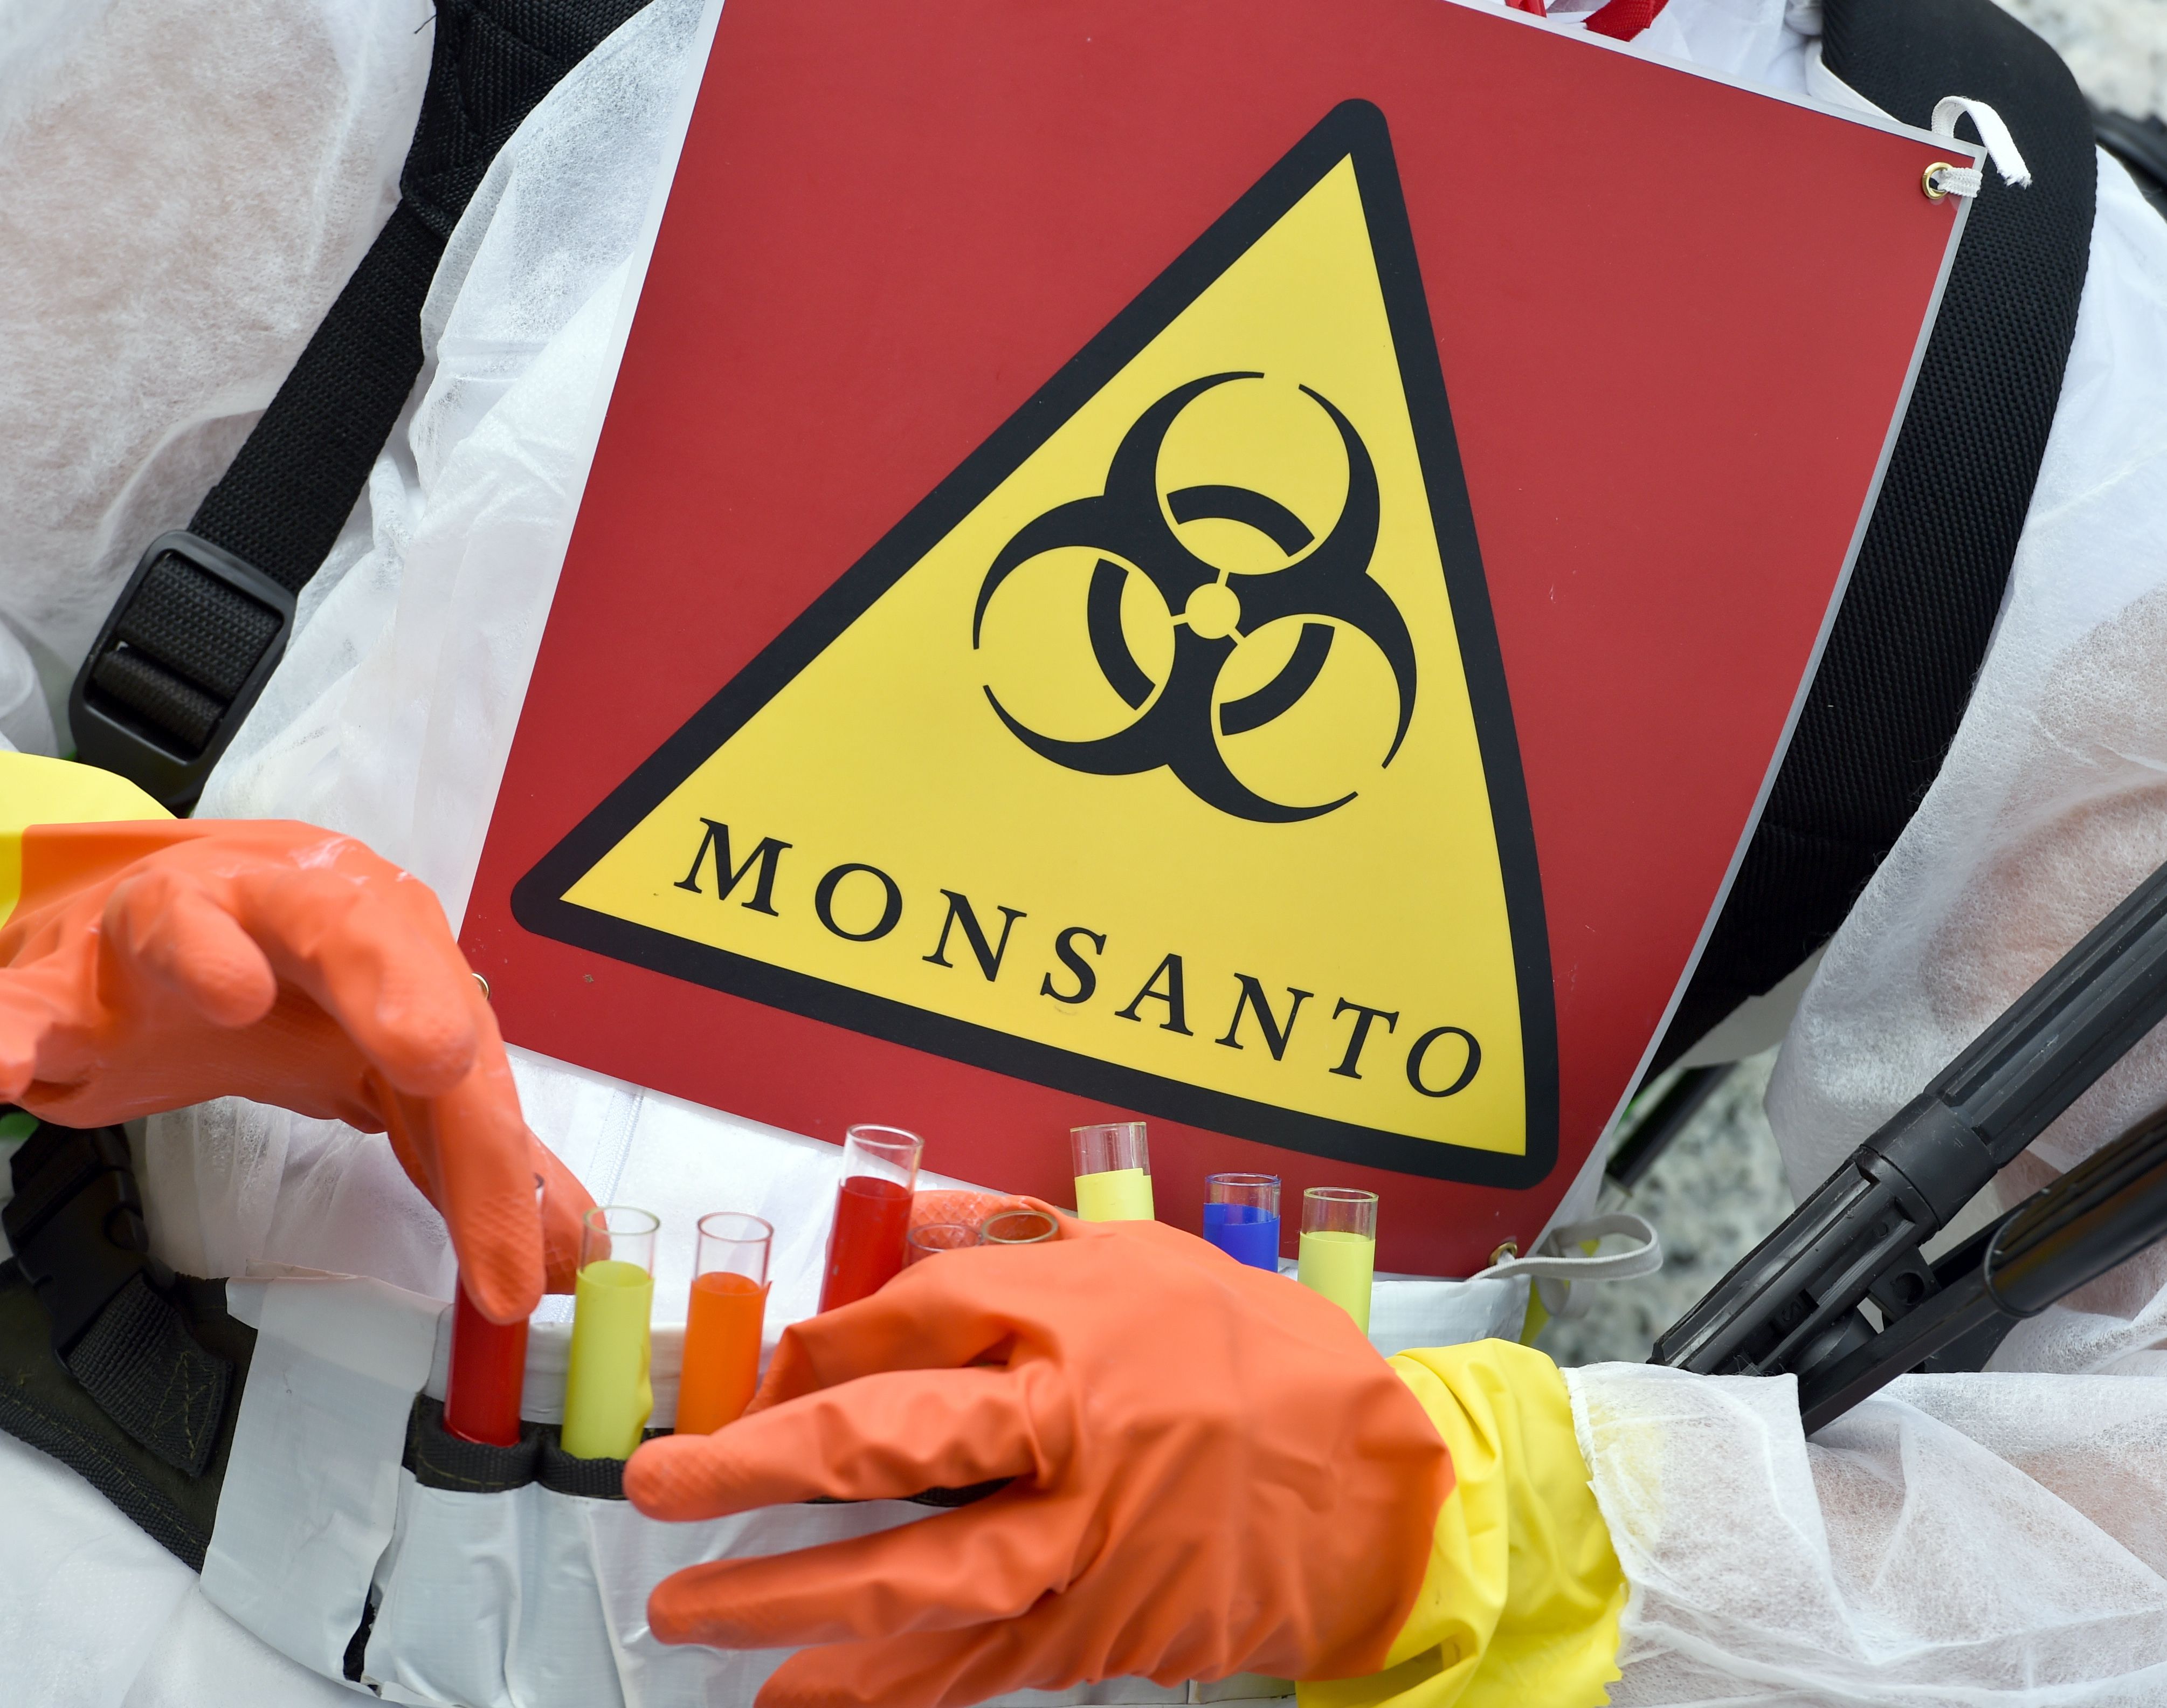 Krebskranke verklagen Monsanto: US-Richter lässt mehr als 400 Klagen wegen Glyphosat zu